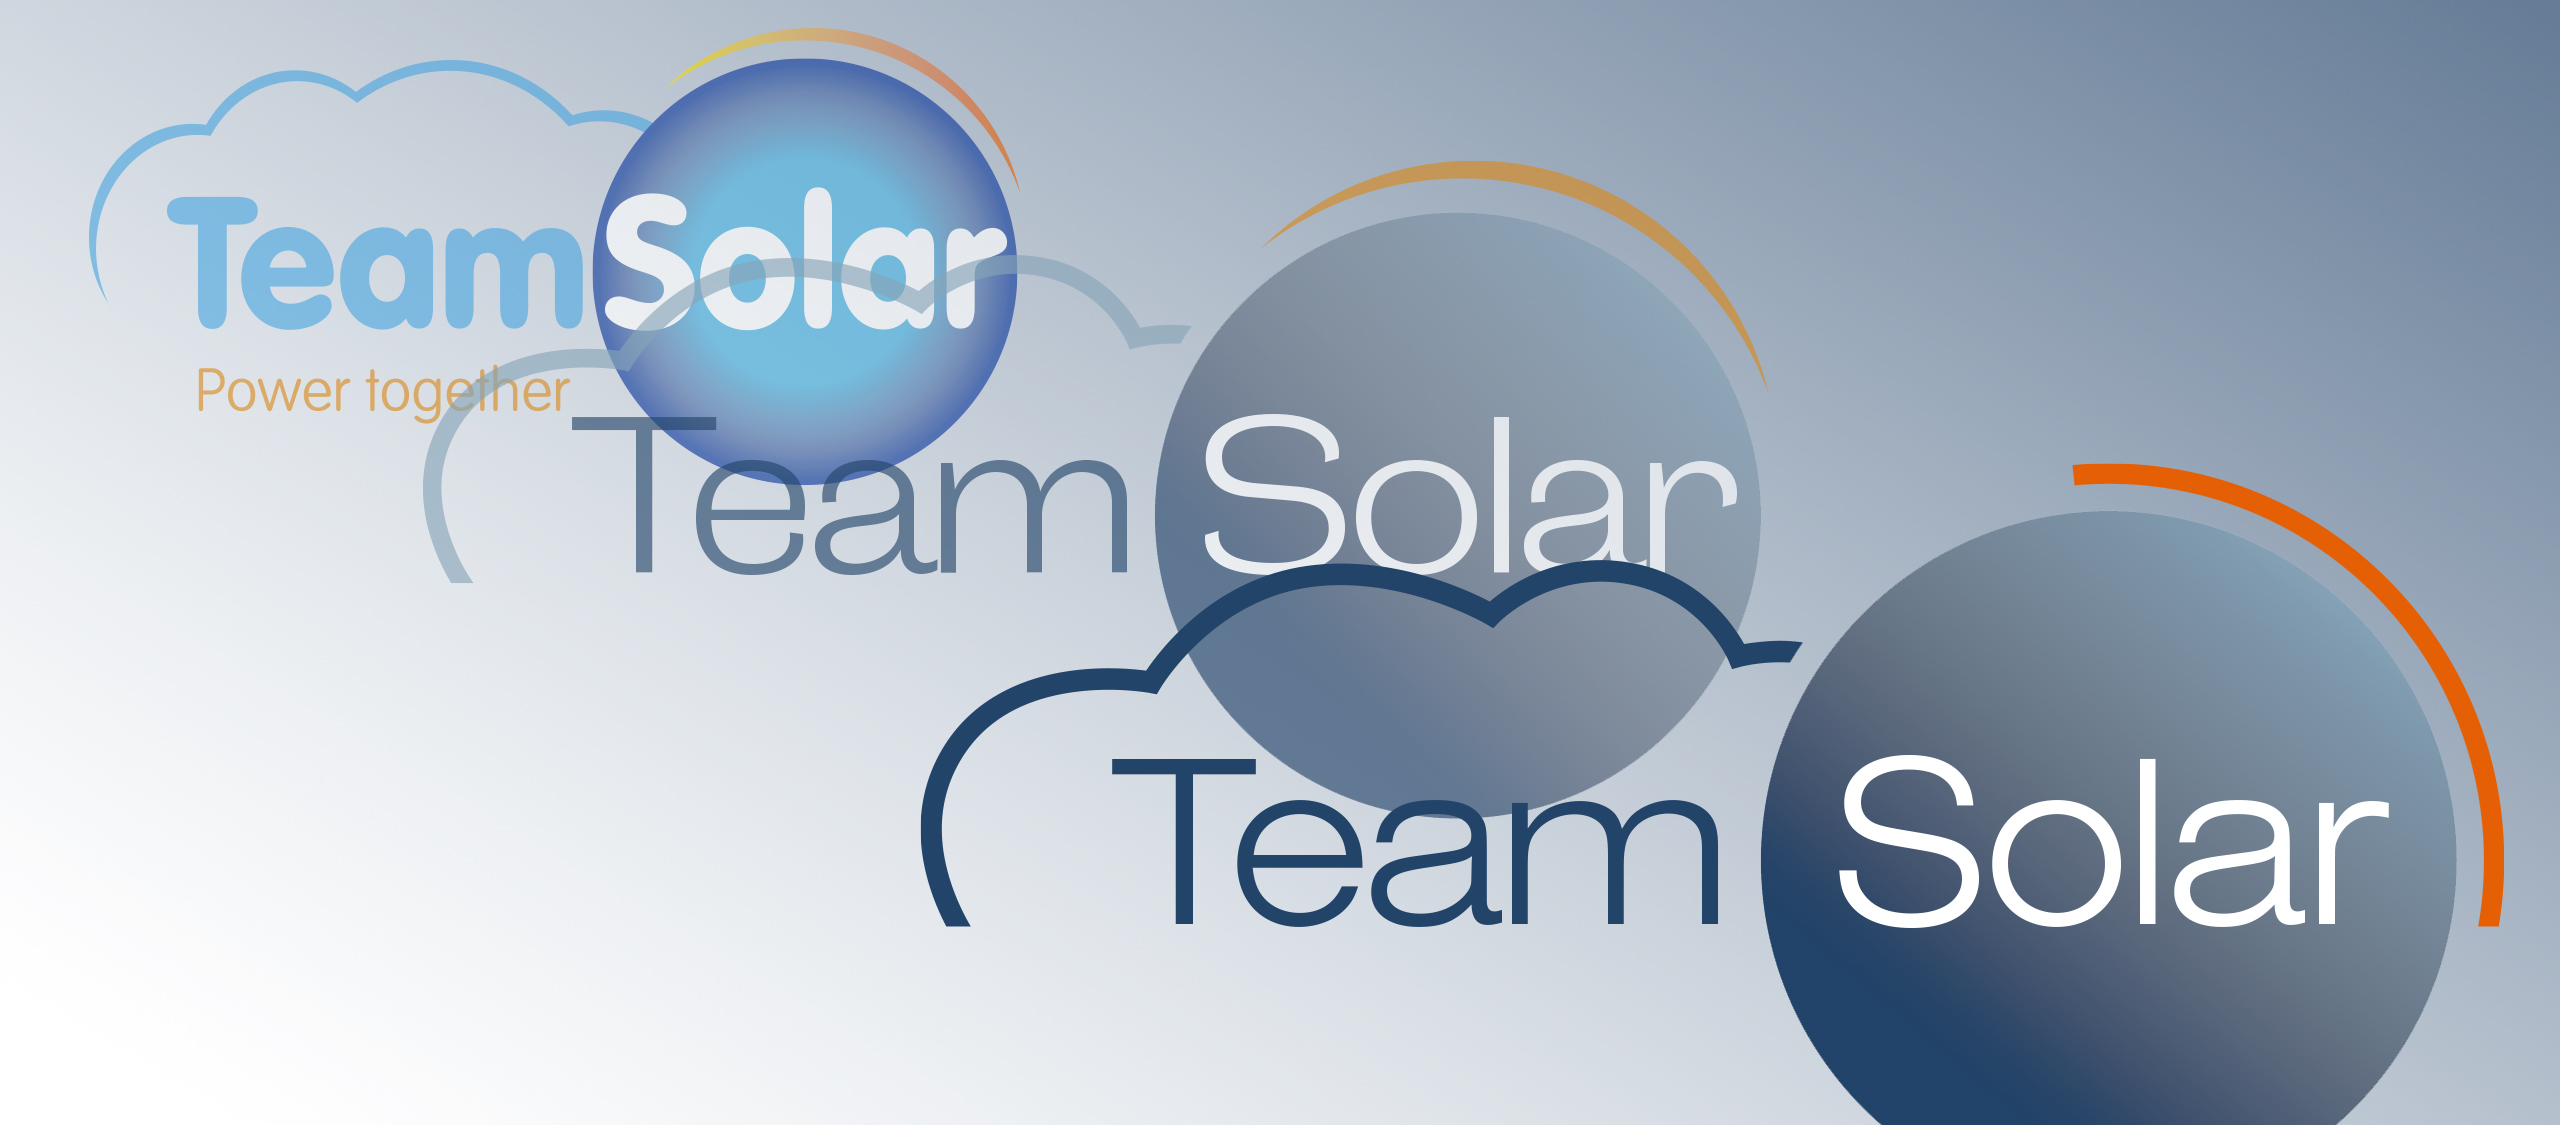 Team Solar Brand Evolution